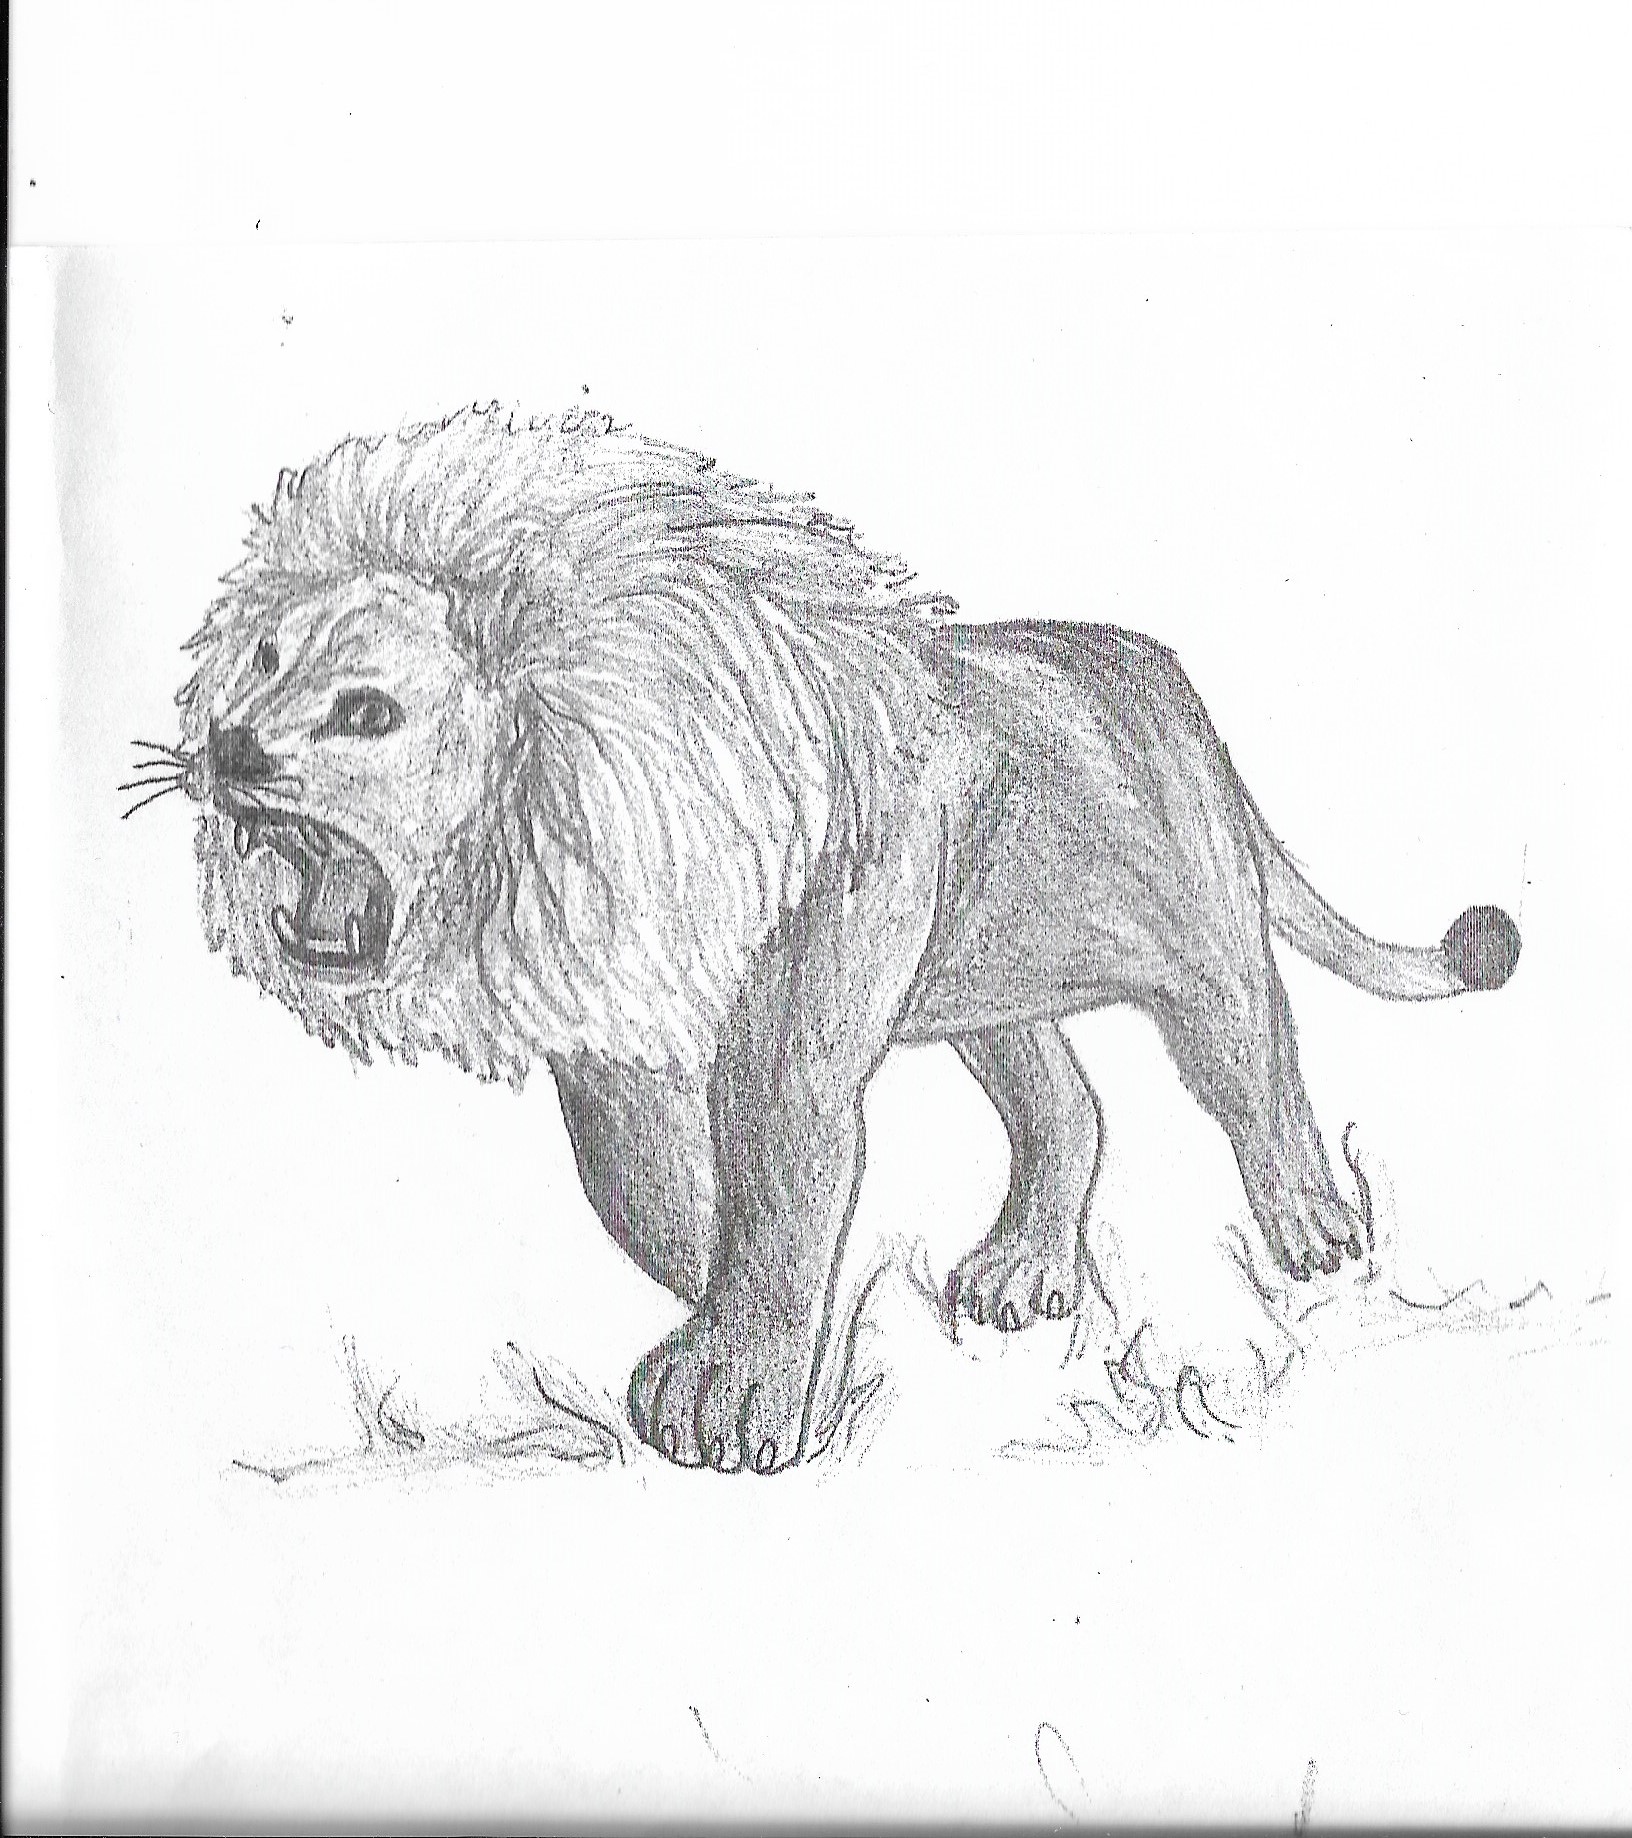 lion - pencil .jpg